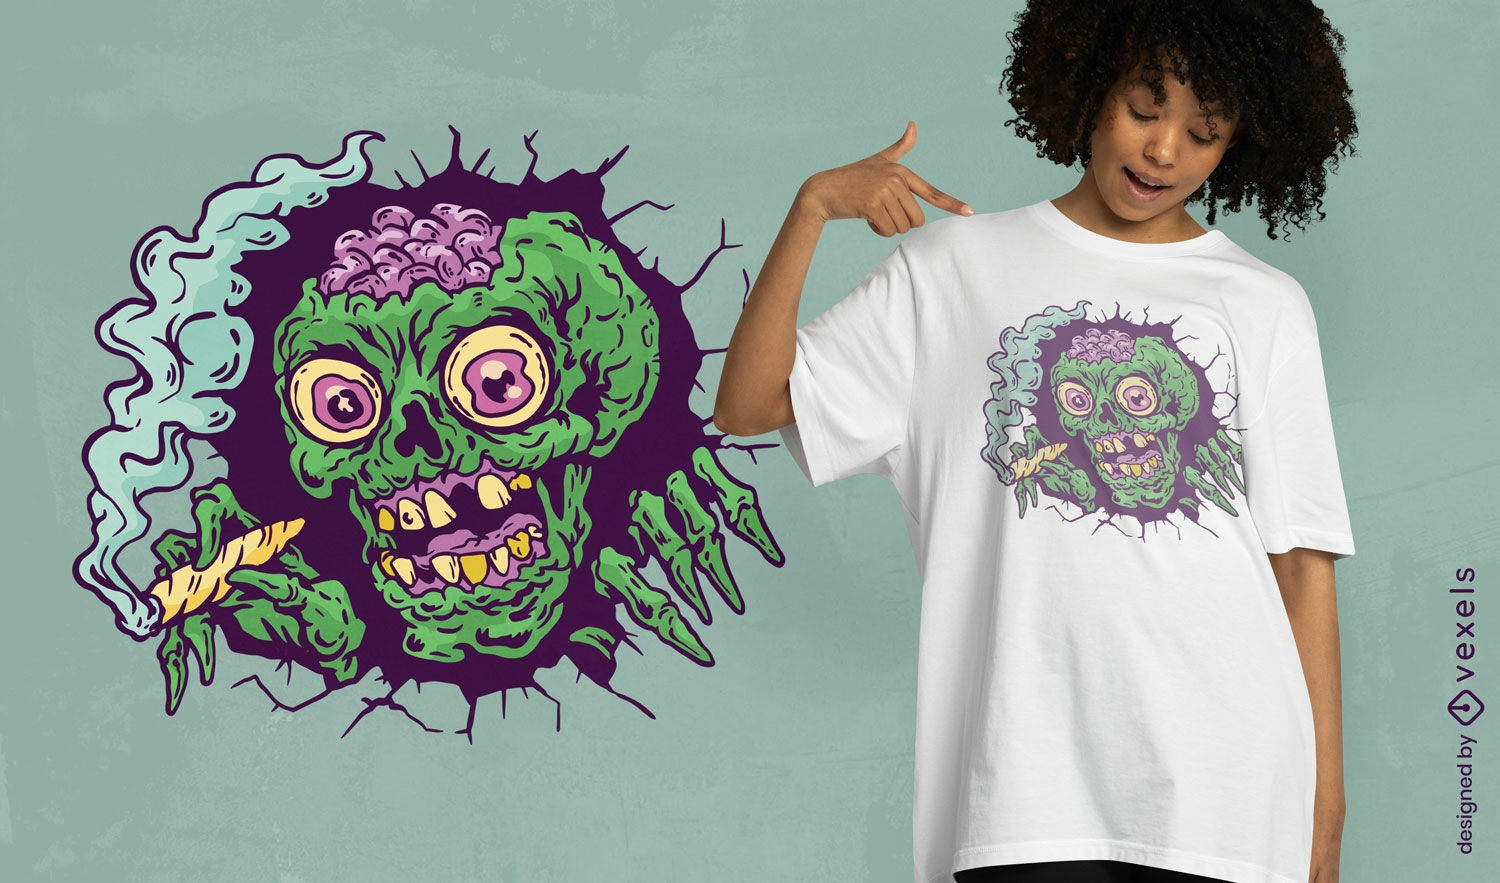 Merging zombie head t-shirt design